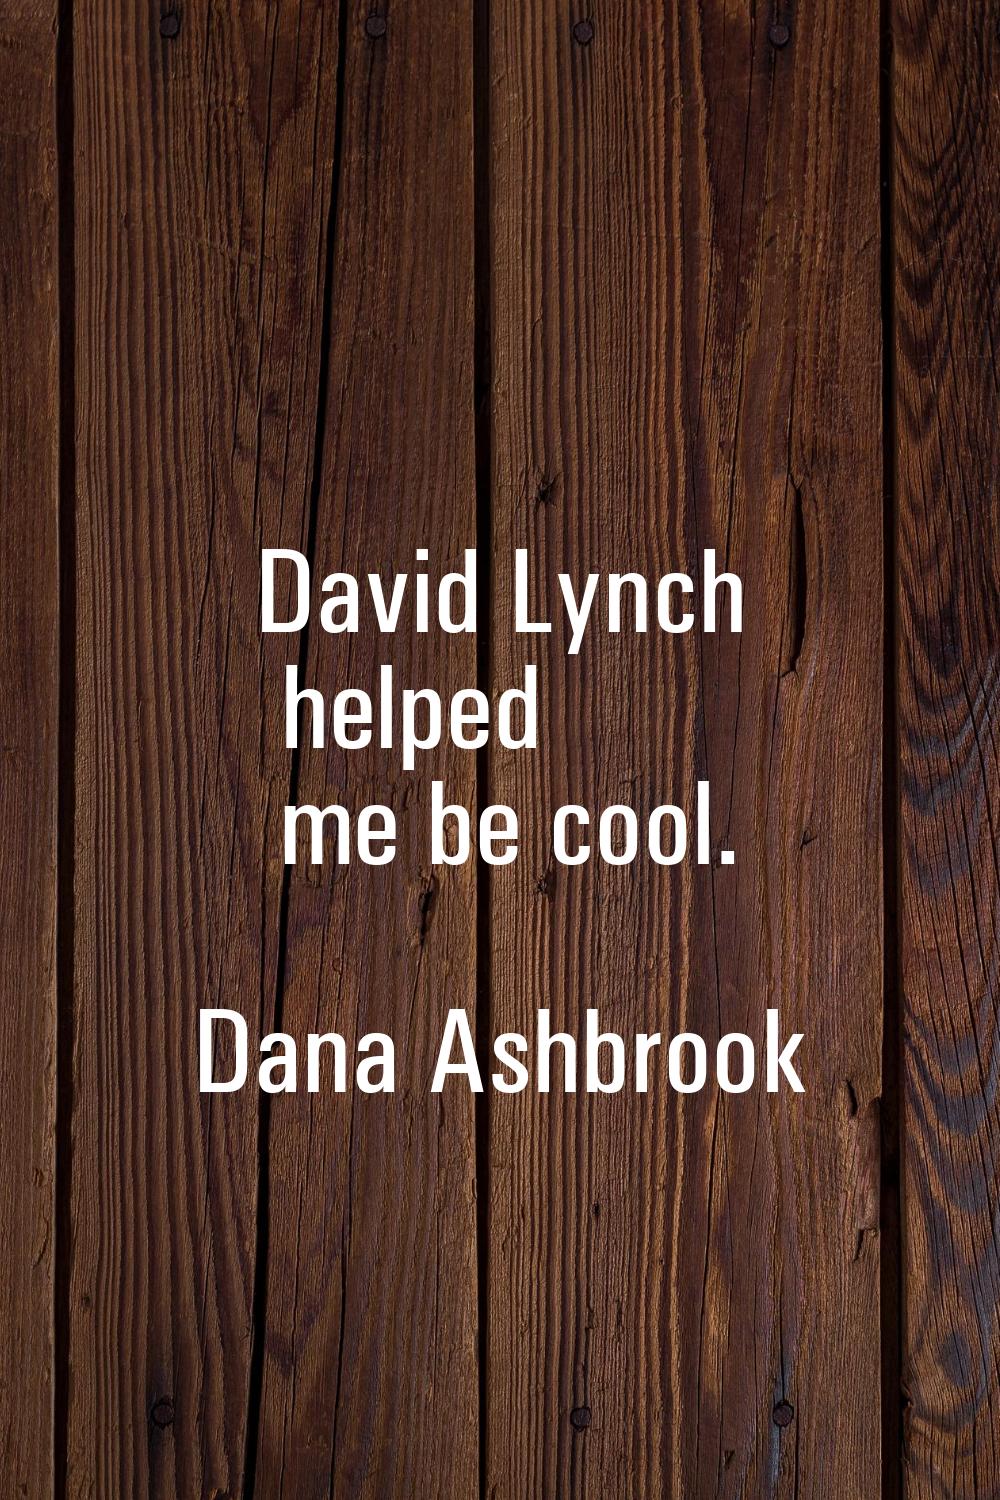 David Lynch helped me be cool.